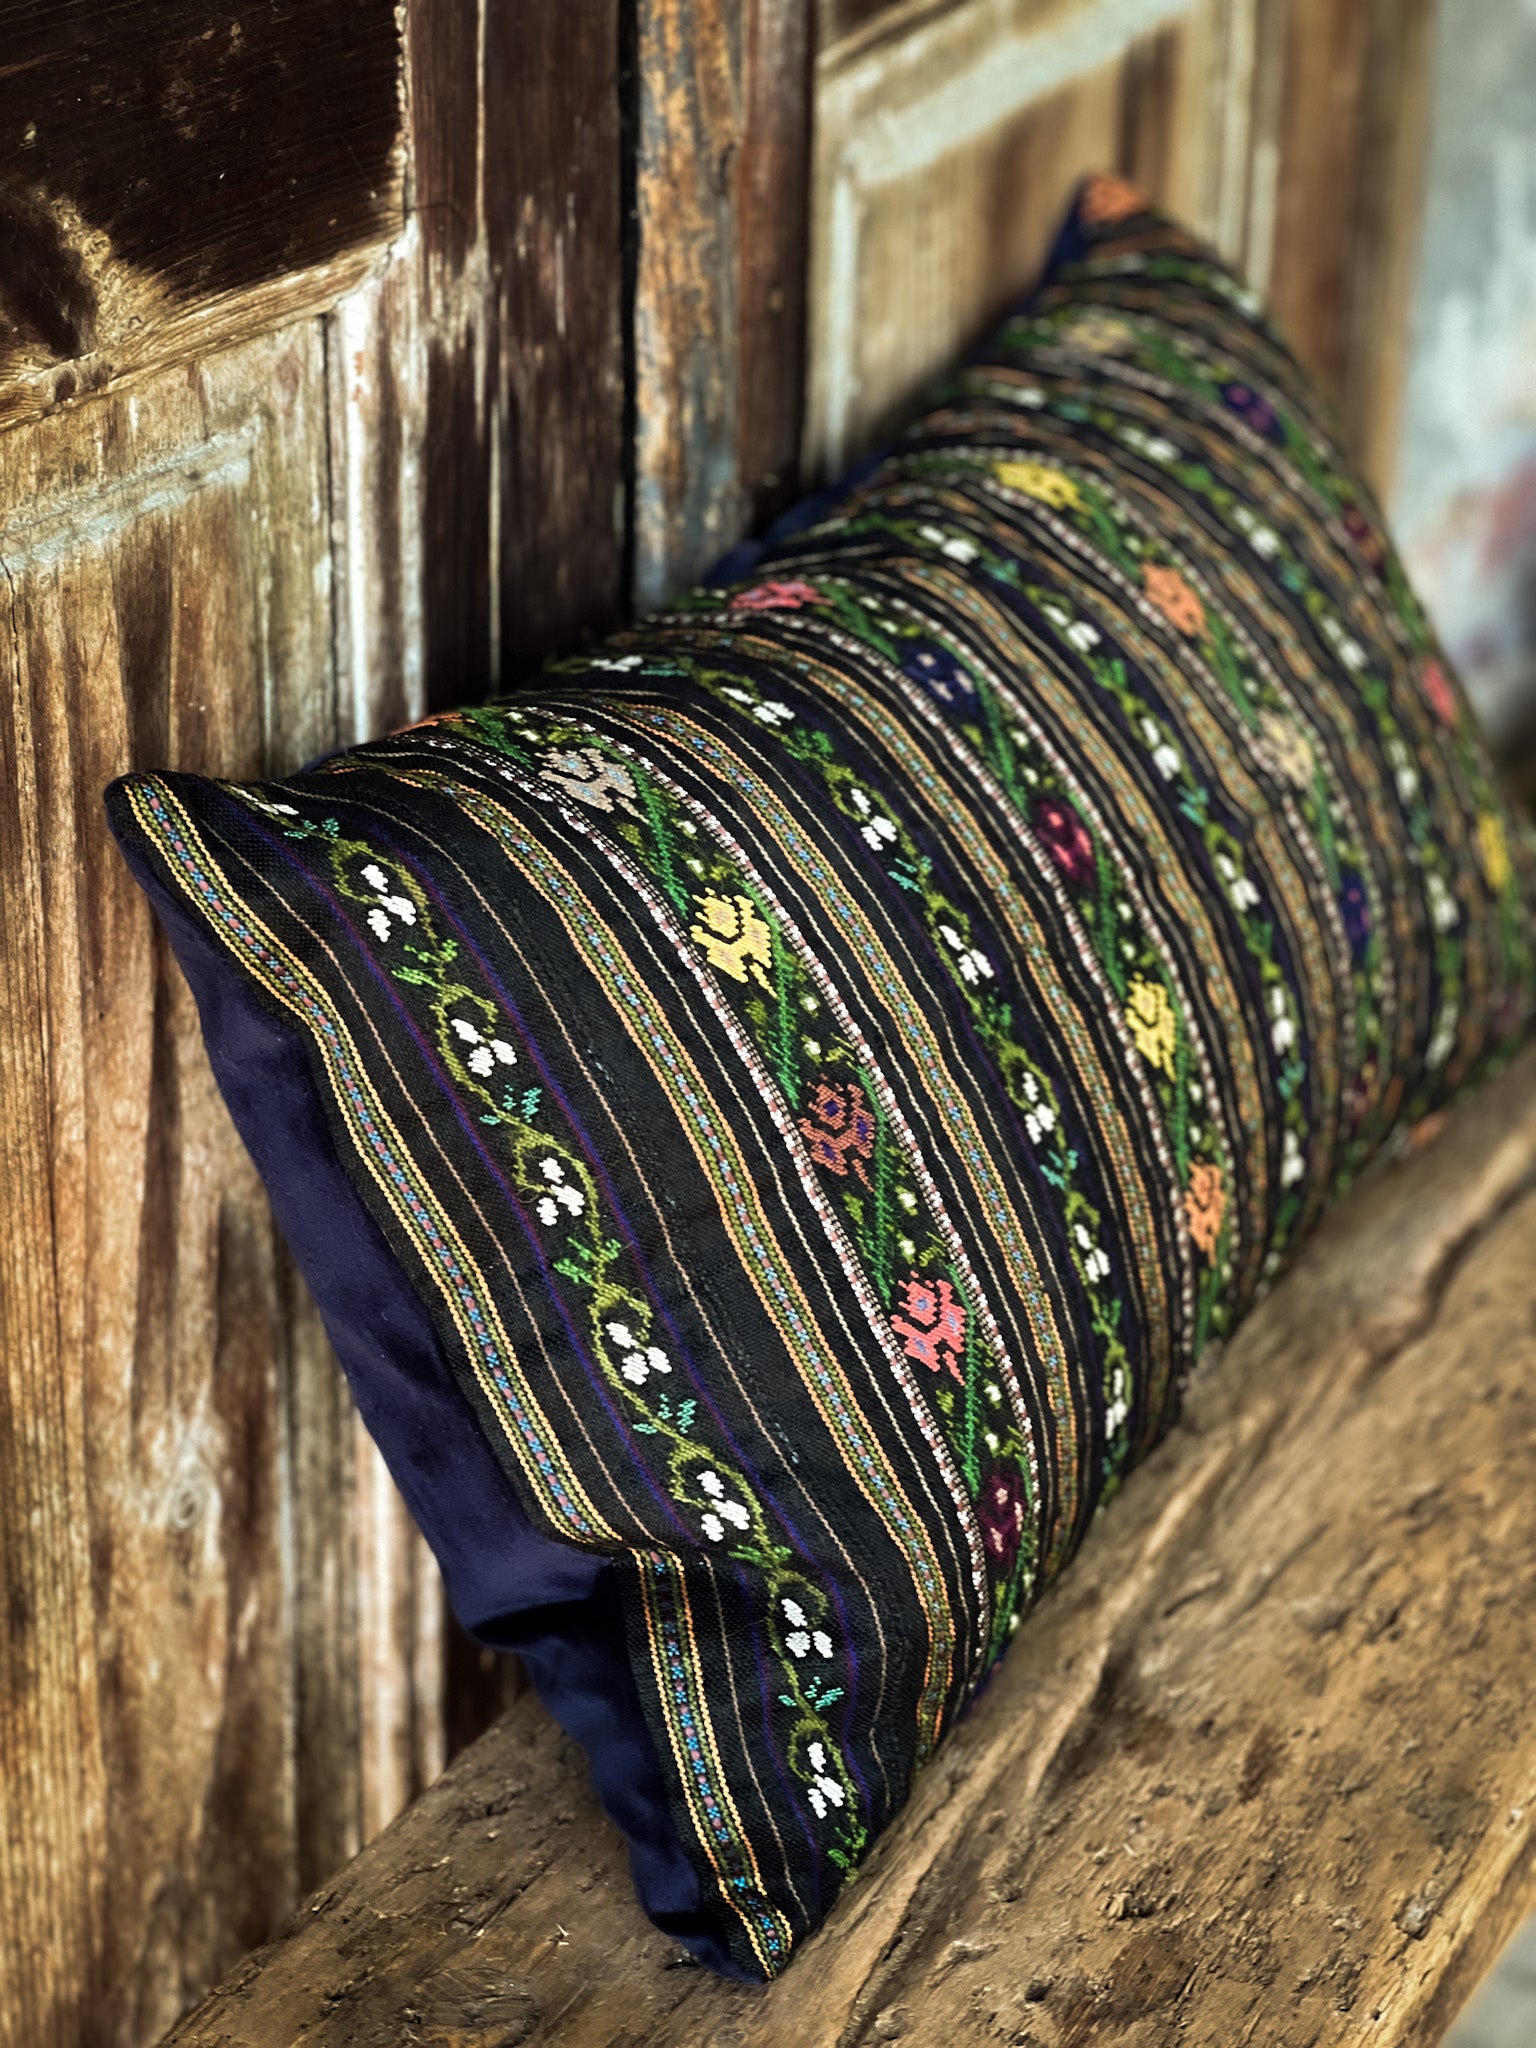 Pillow: Artifact textile, handwoven in Romania - P458